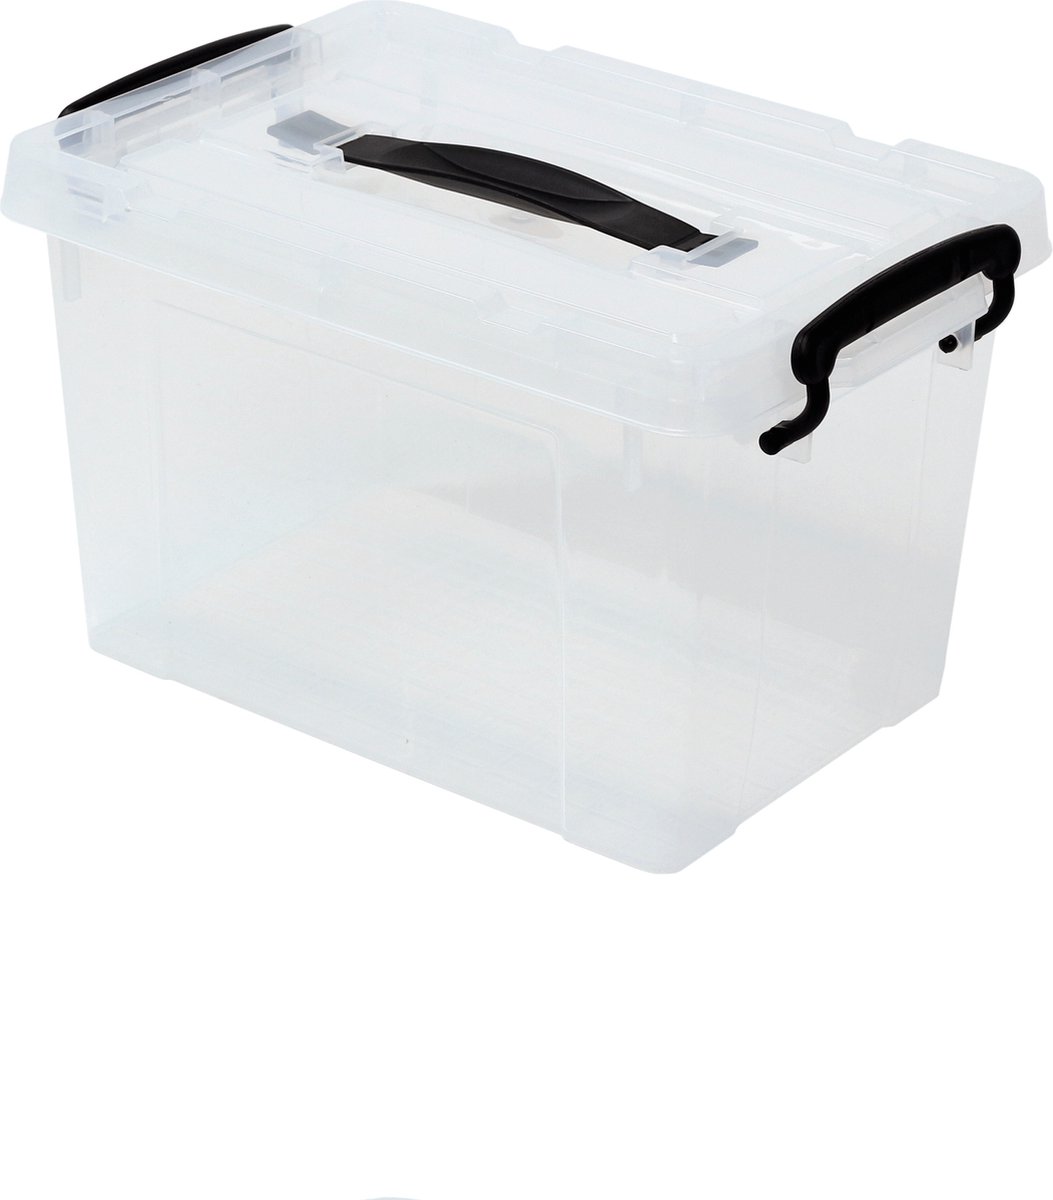 Alpac Opbergbox - Opbergbox met deksel - Opbergdoos - 6 Liter - 290 x 200 x 170 mm - Transparant